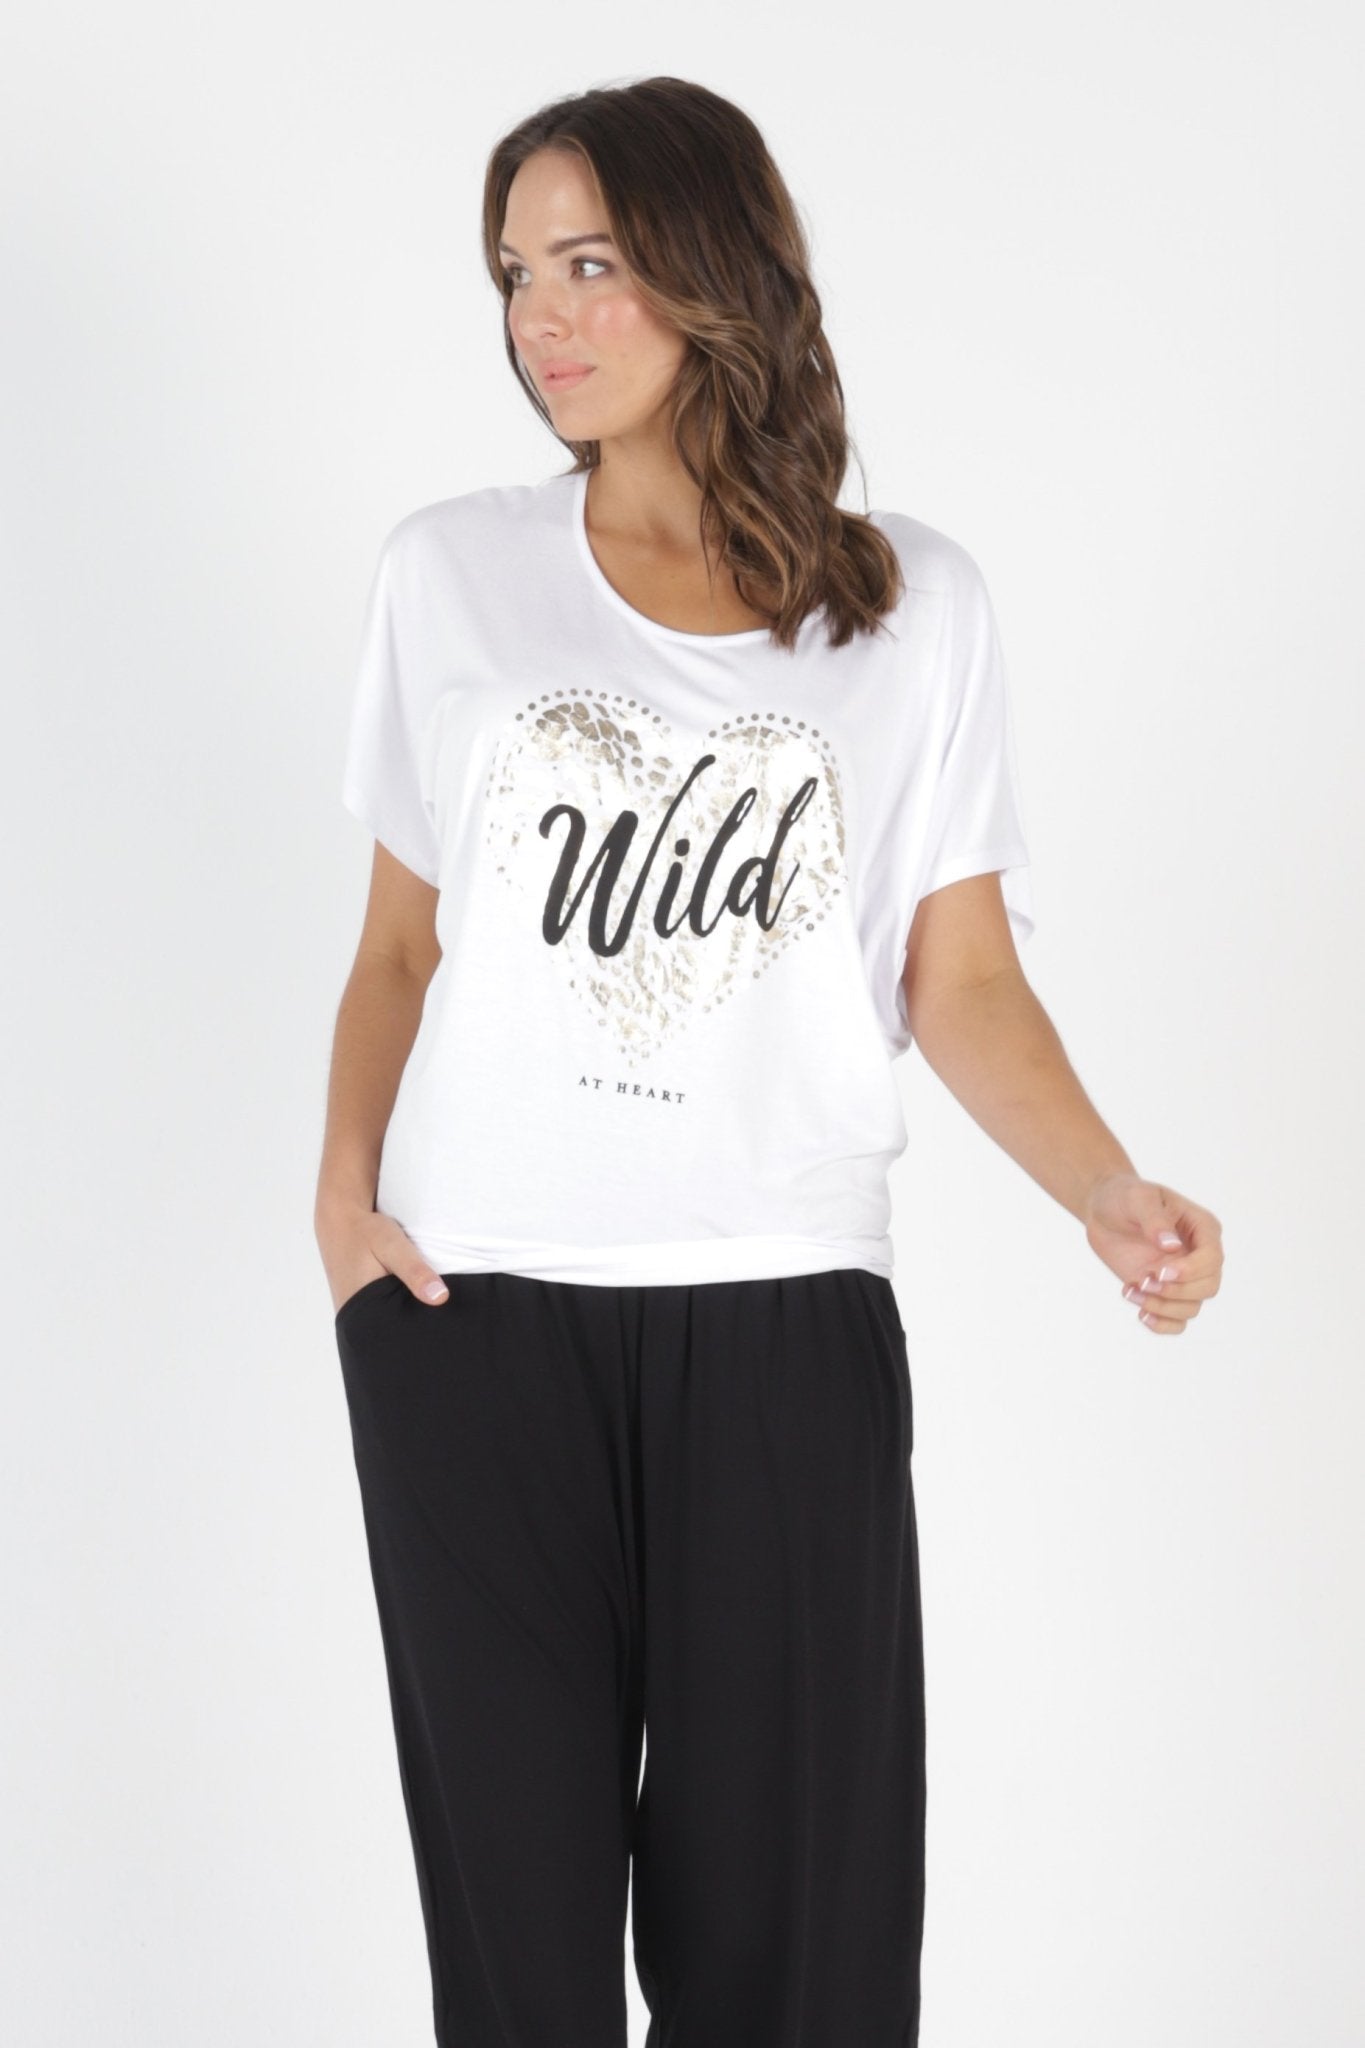 Betty Basics Maui Tee in White with Wild Print - Hey Sara